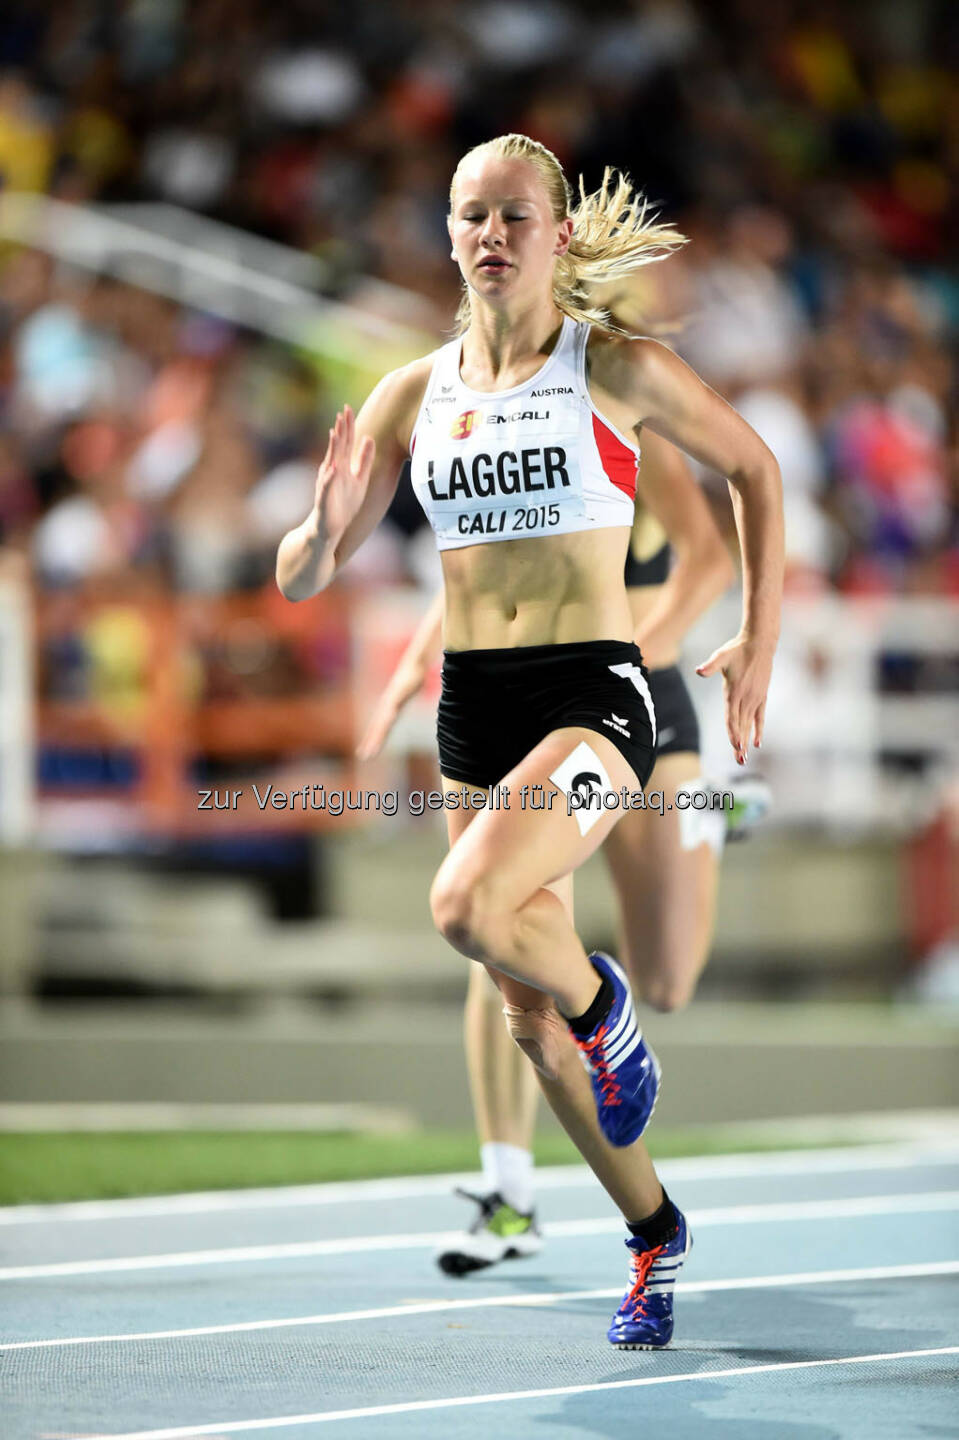 Sarah Lagger, 200m (Bild: ÖLV/Jiro Mochizuki)